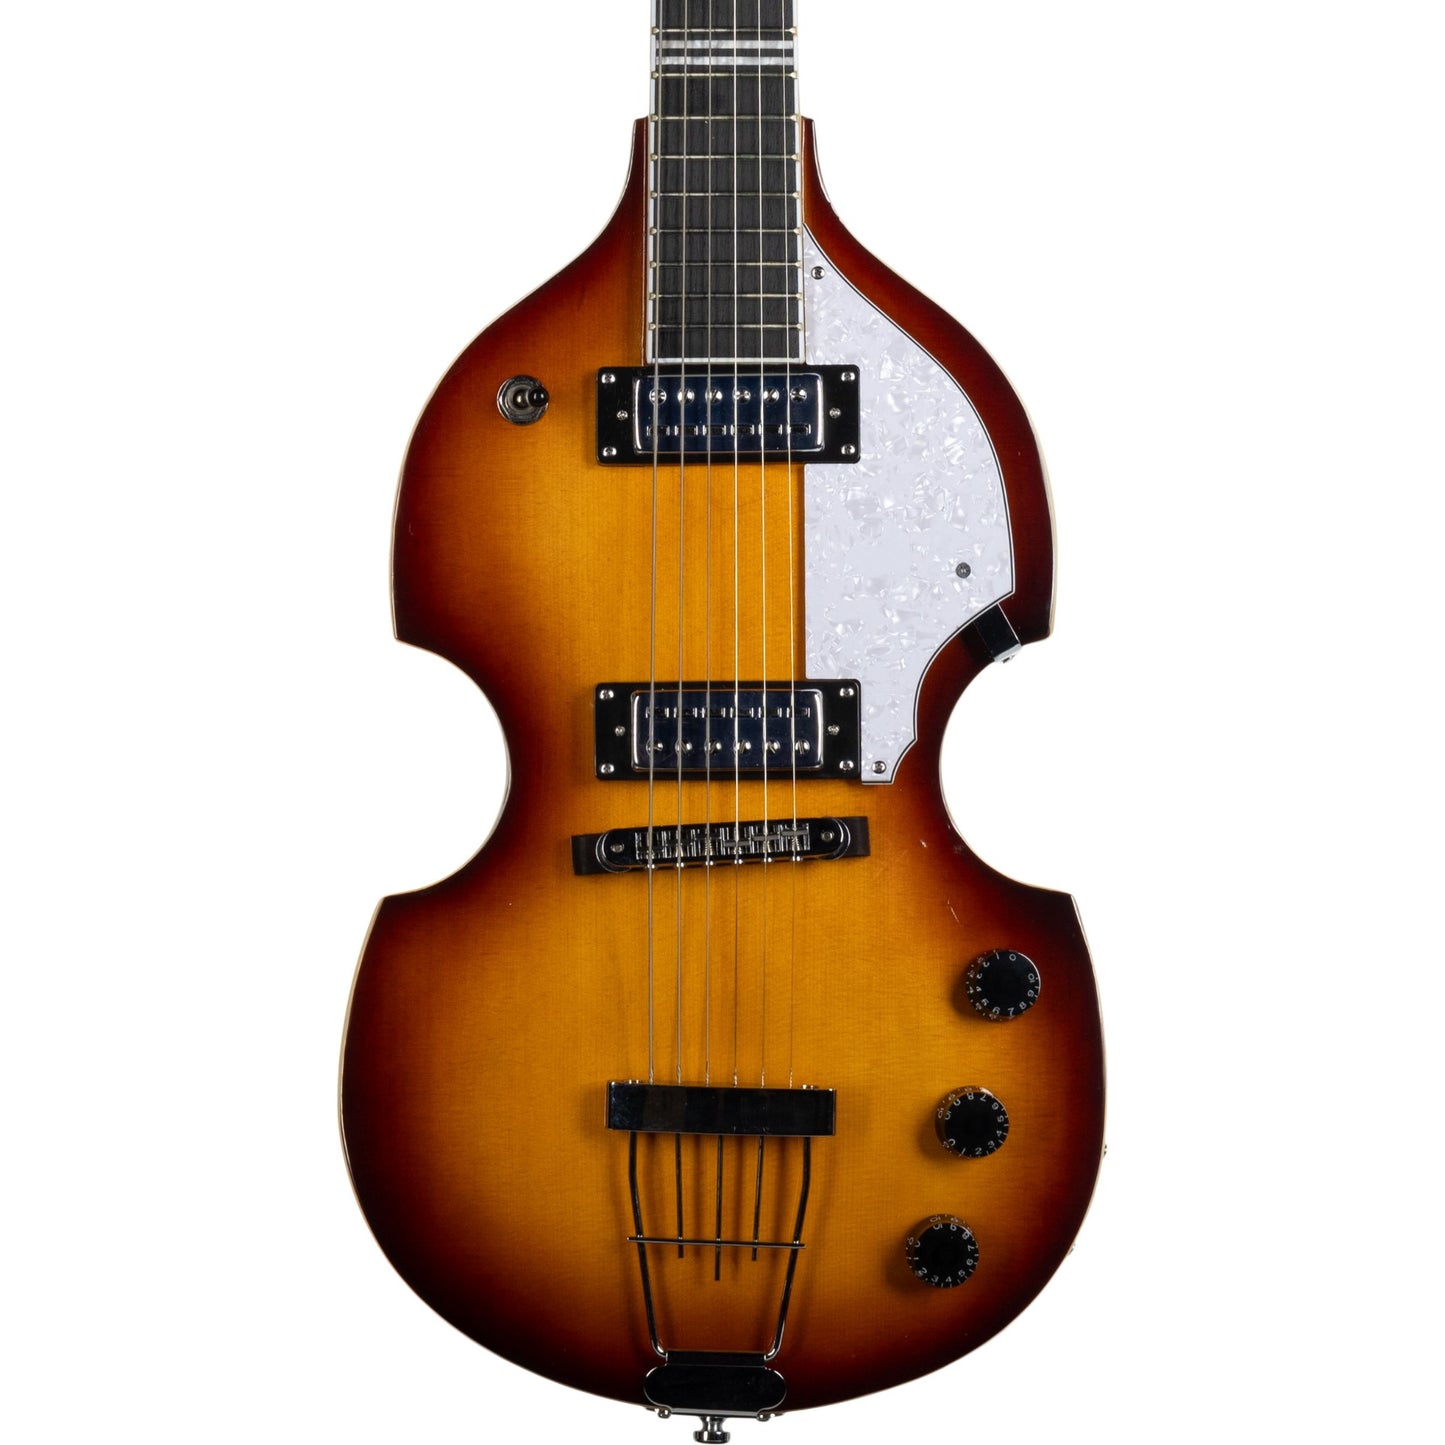 Hofner Ignition Pro Violin Guitar in Suburst